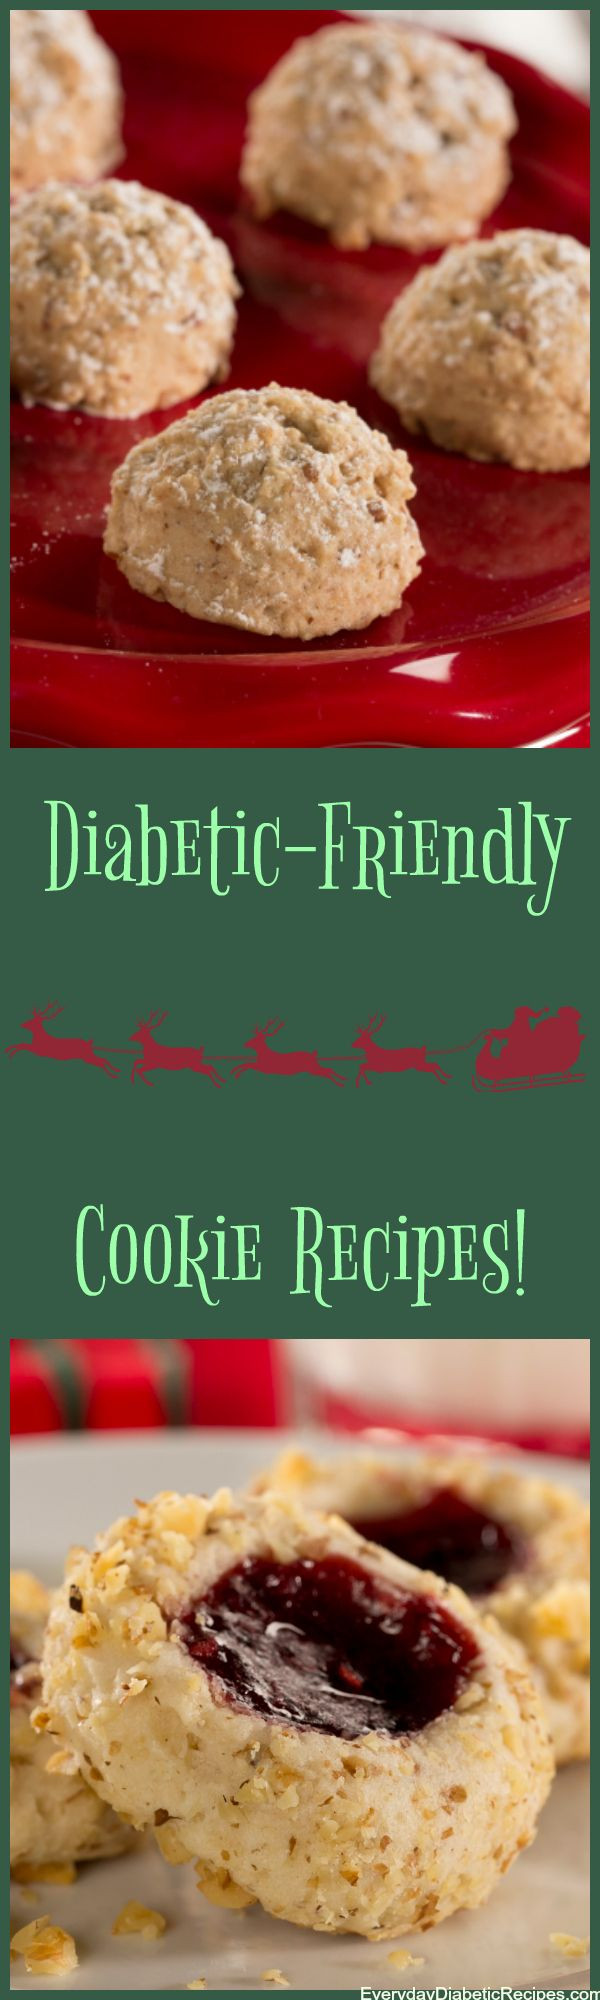 Diabetic Christmas Cookies Recipes
 Best 25 Diabetic cookie recipes ideas on Pinterest